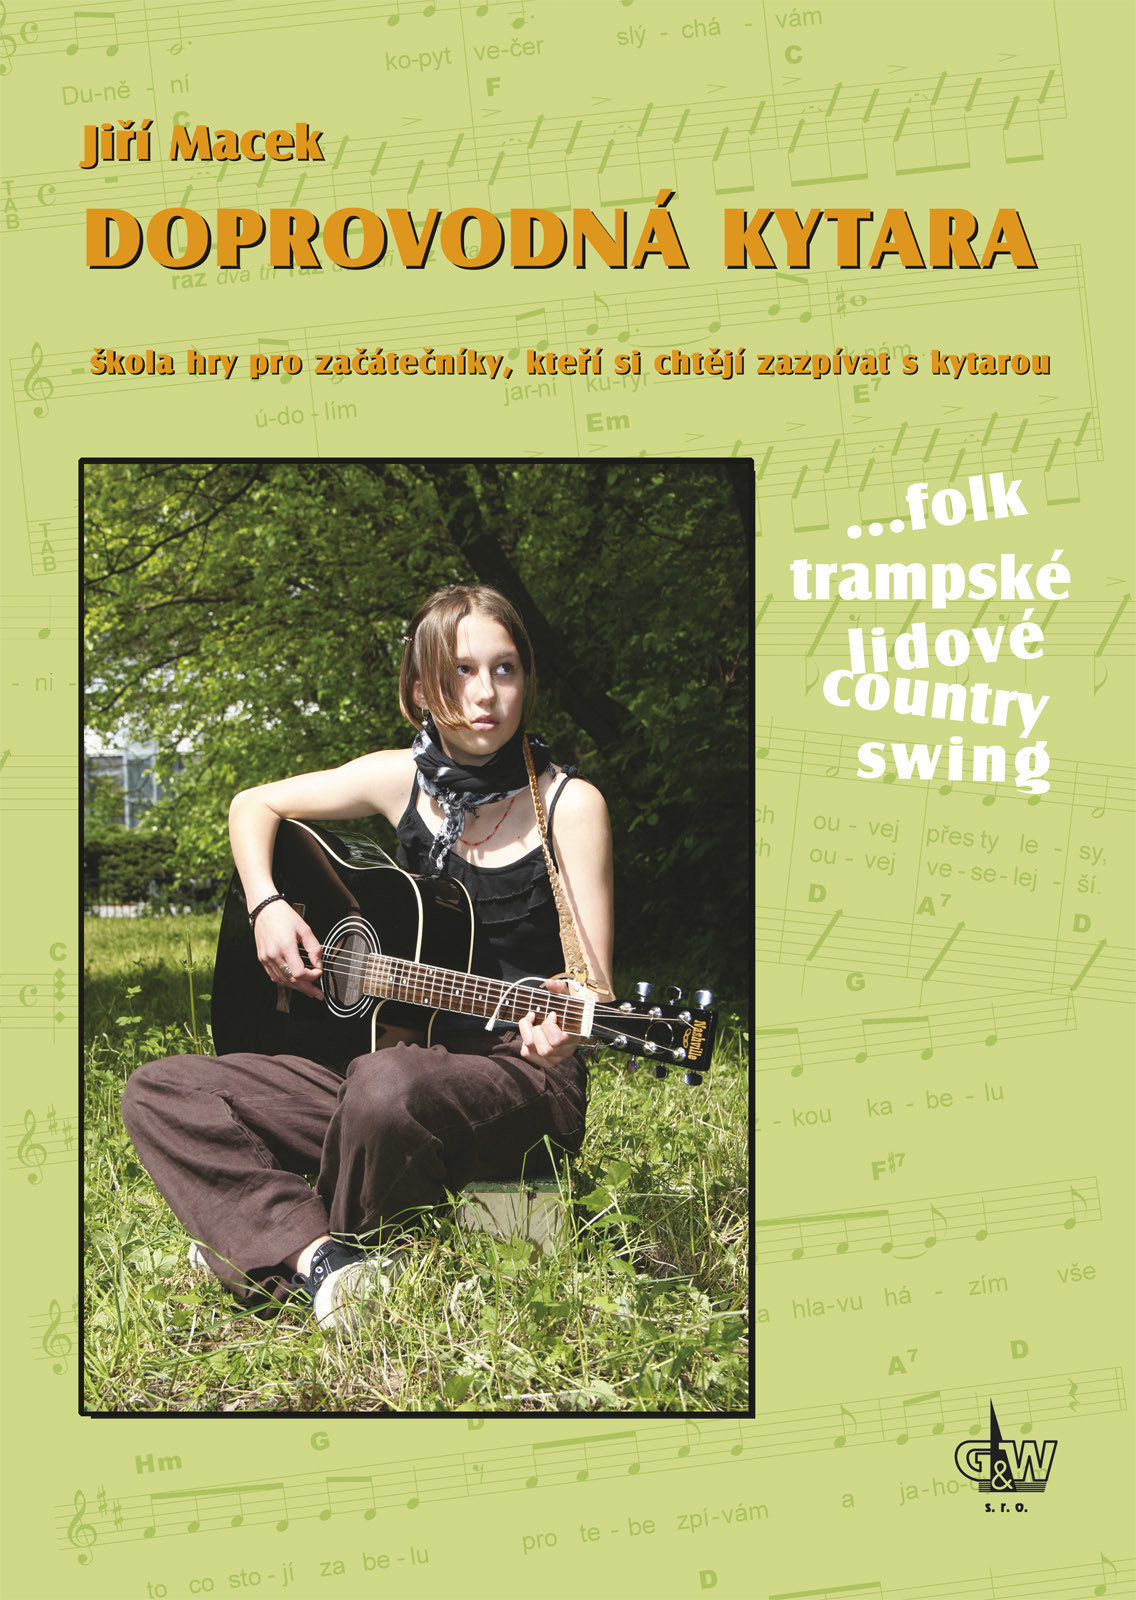 Literatură vocală Jiří Macek Doprovodná Kytara Partituri